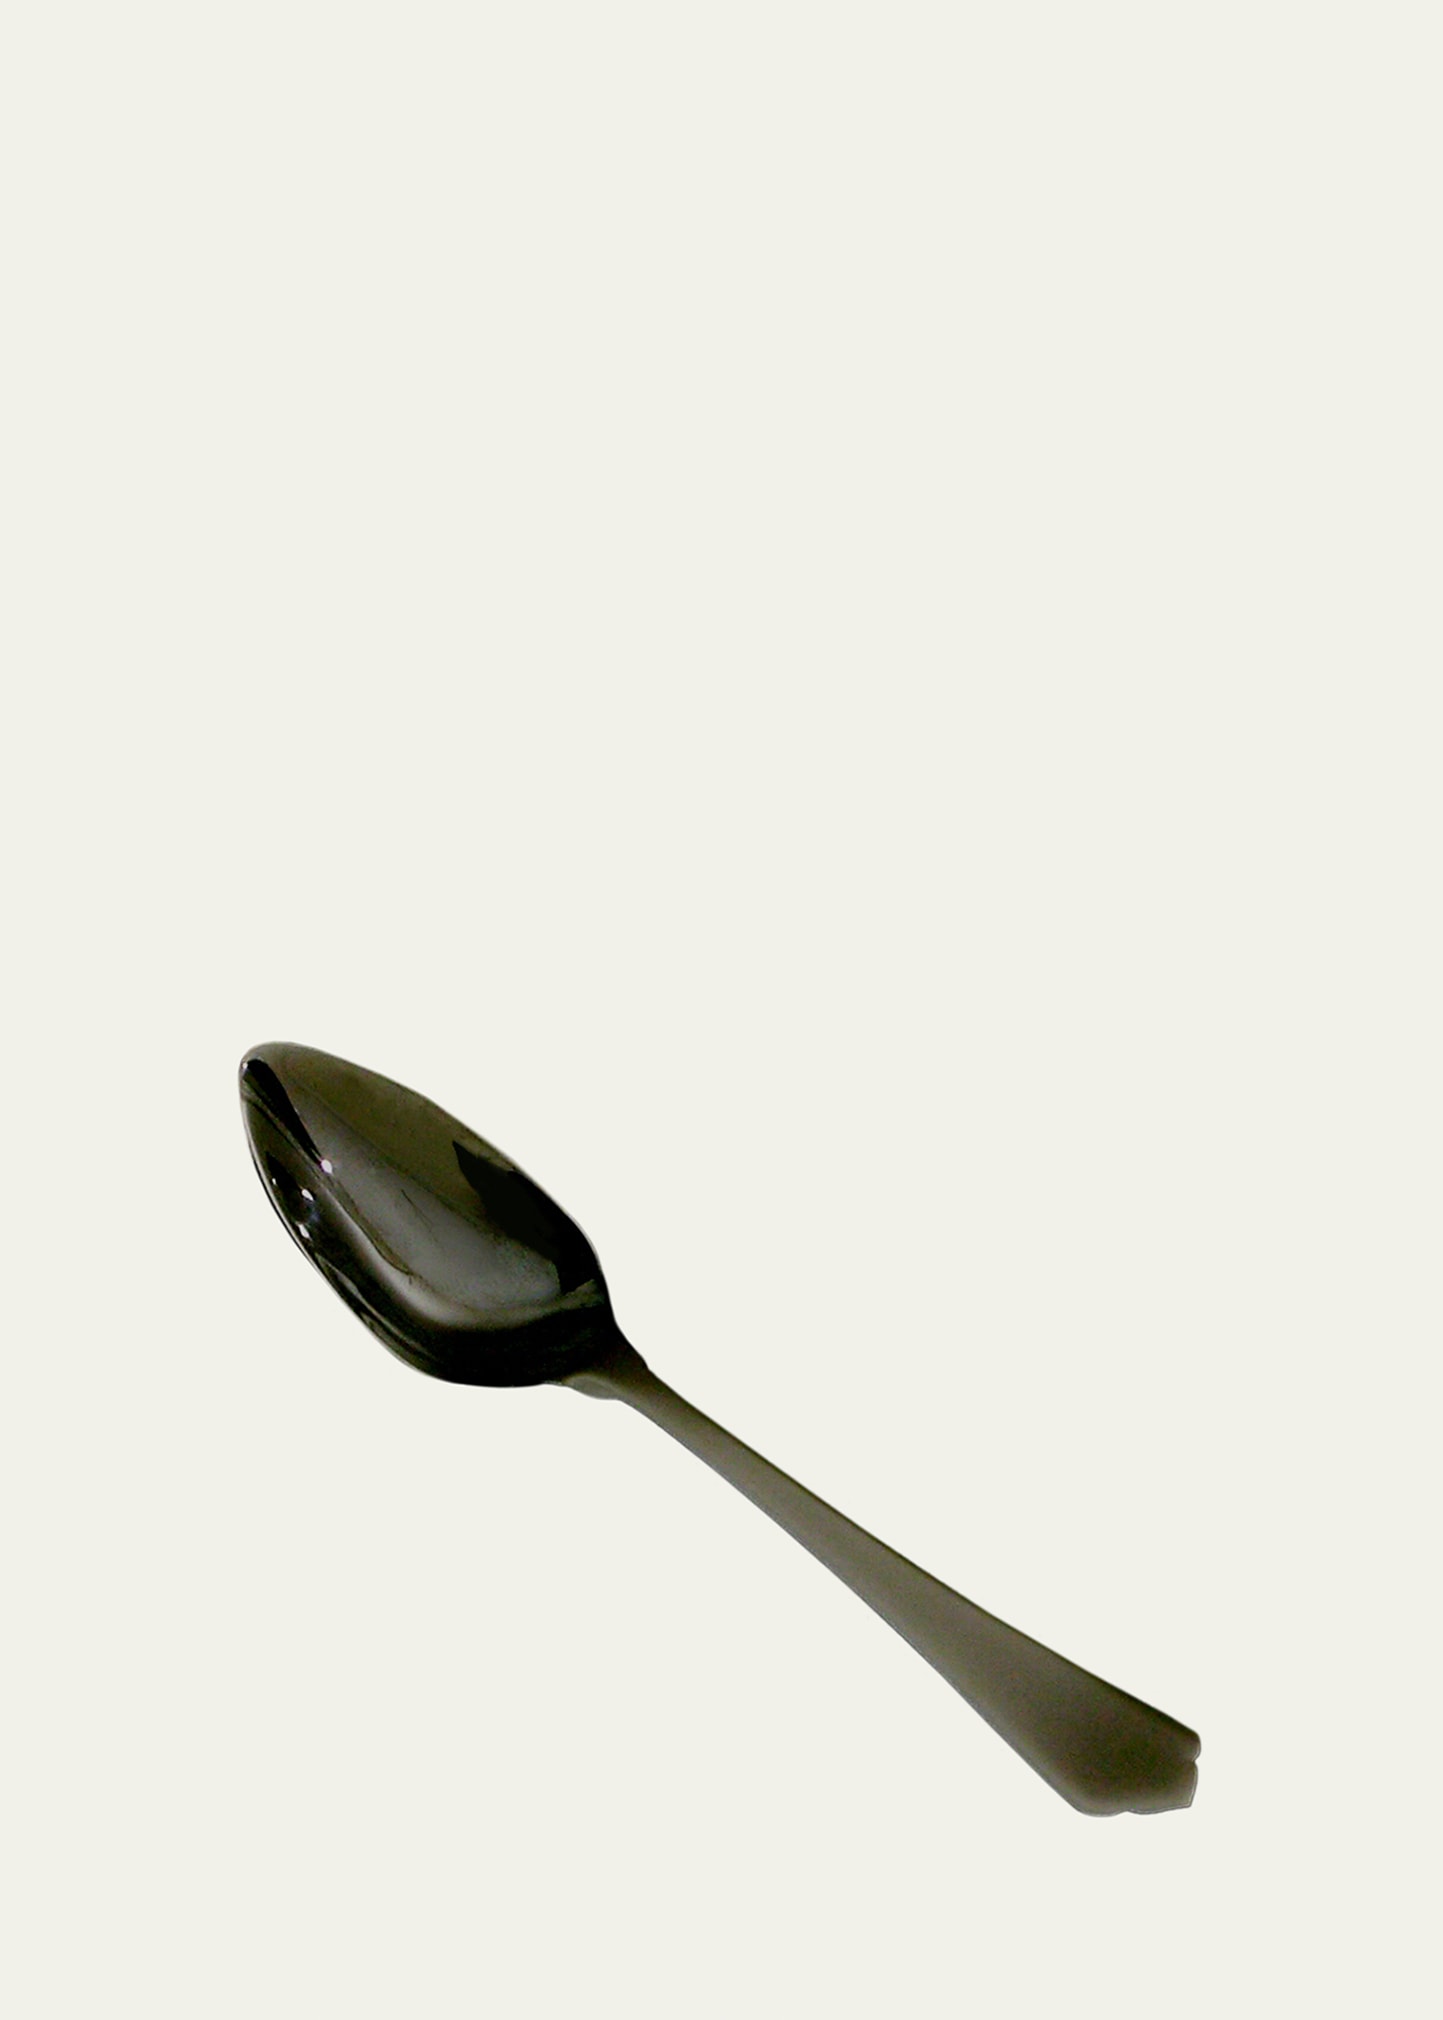 Astier De Vilatte Naples Dessert Spoon - Stainless Steel In Multi